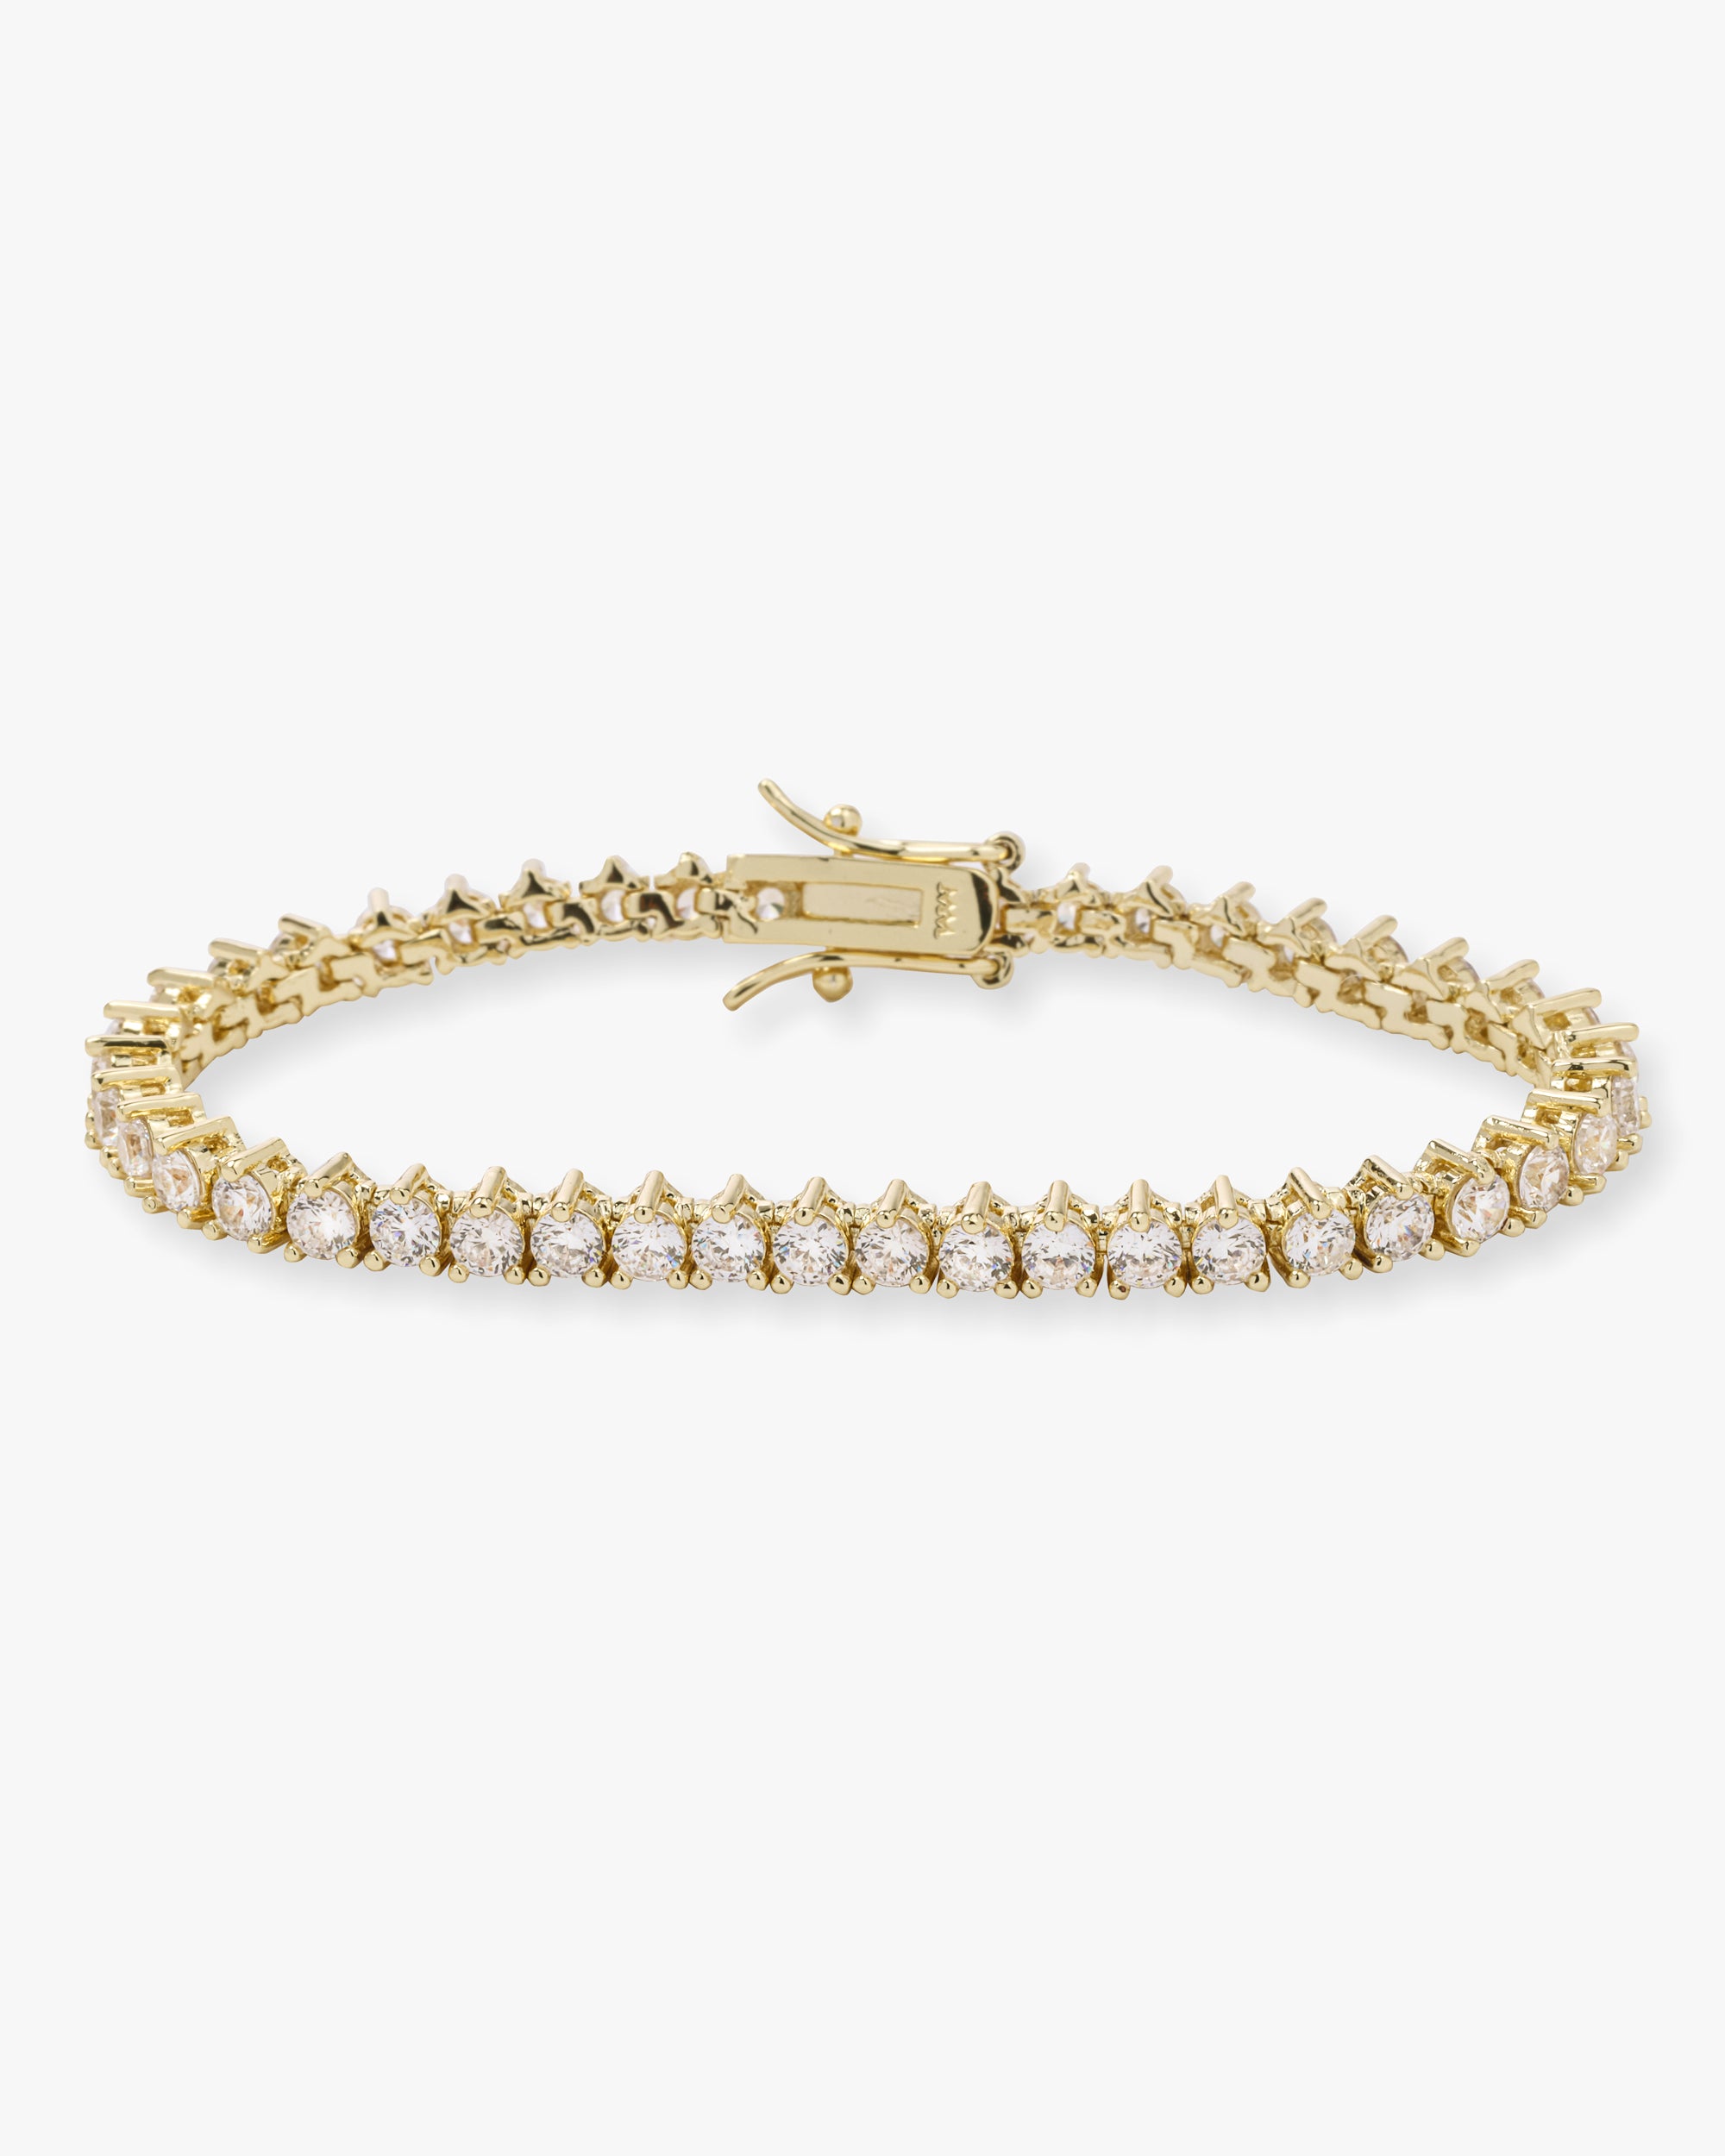 Not Your Basic Tennis Bracelet – Melinda Maria Jewelry